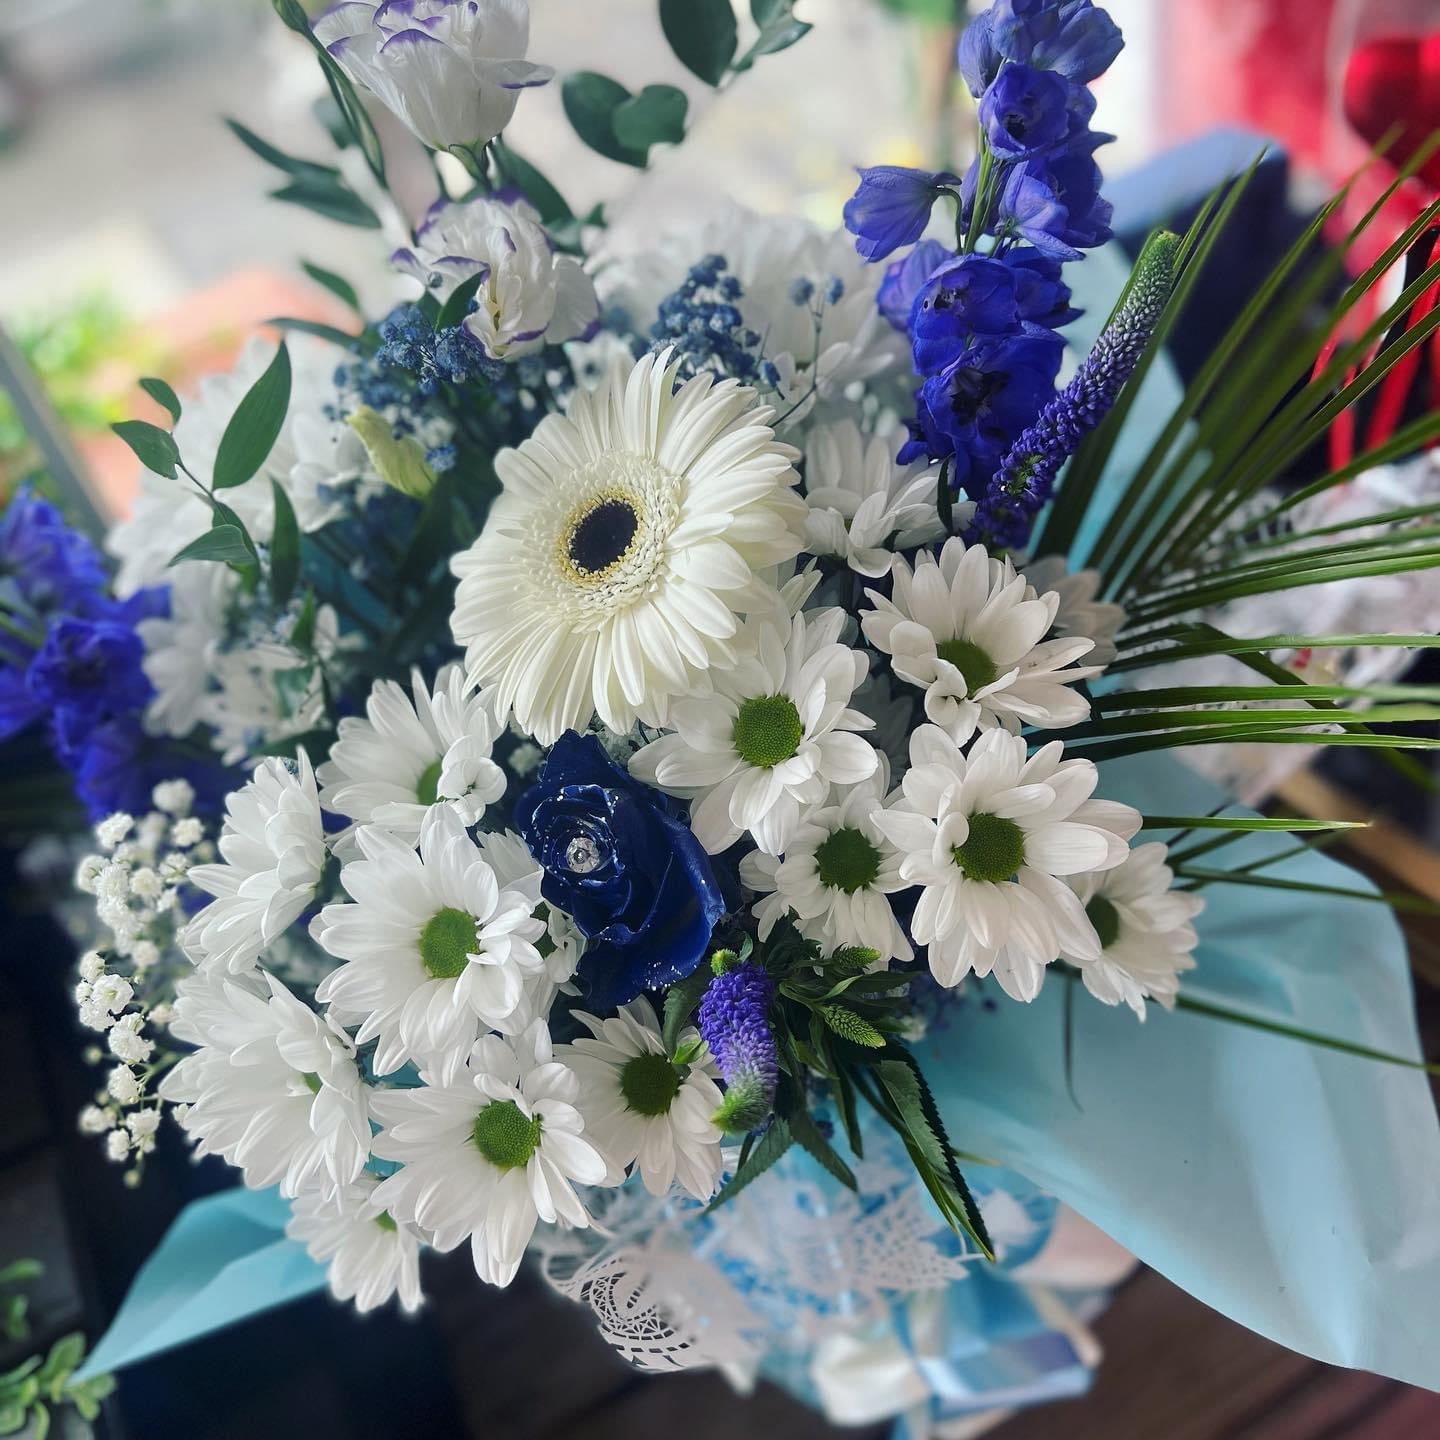 Mixed Flower Bouquet - Blue and White Flower Arrangements